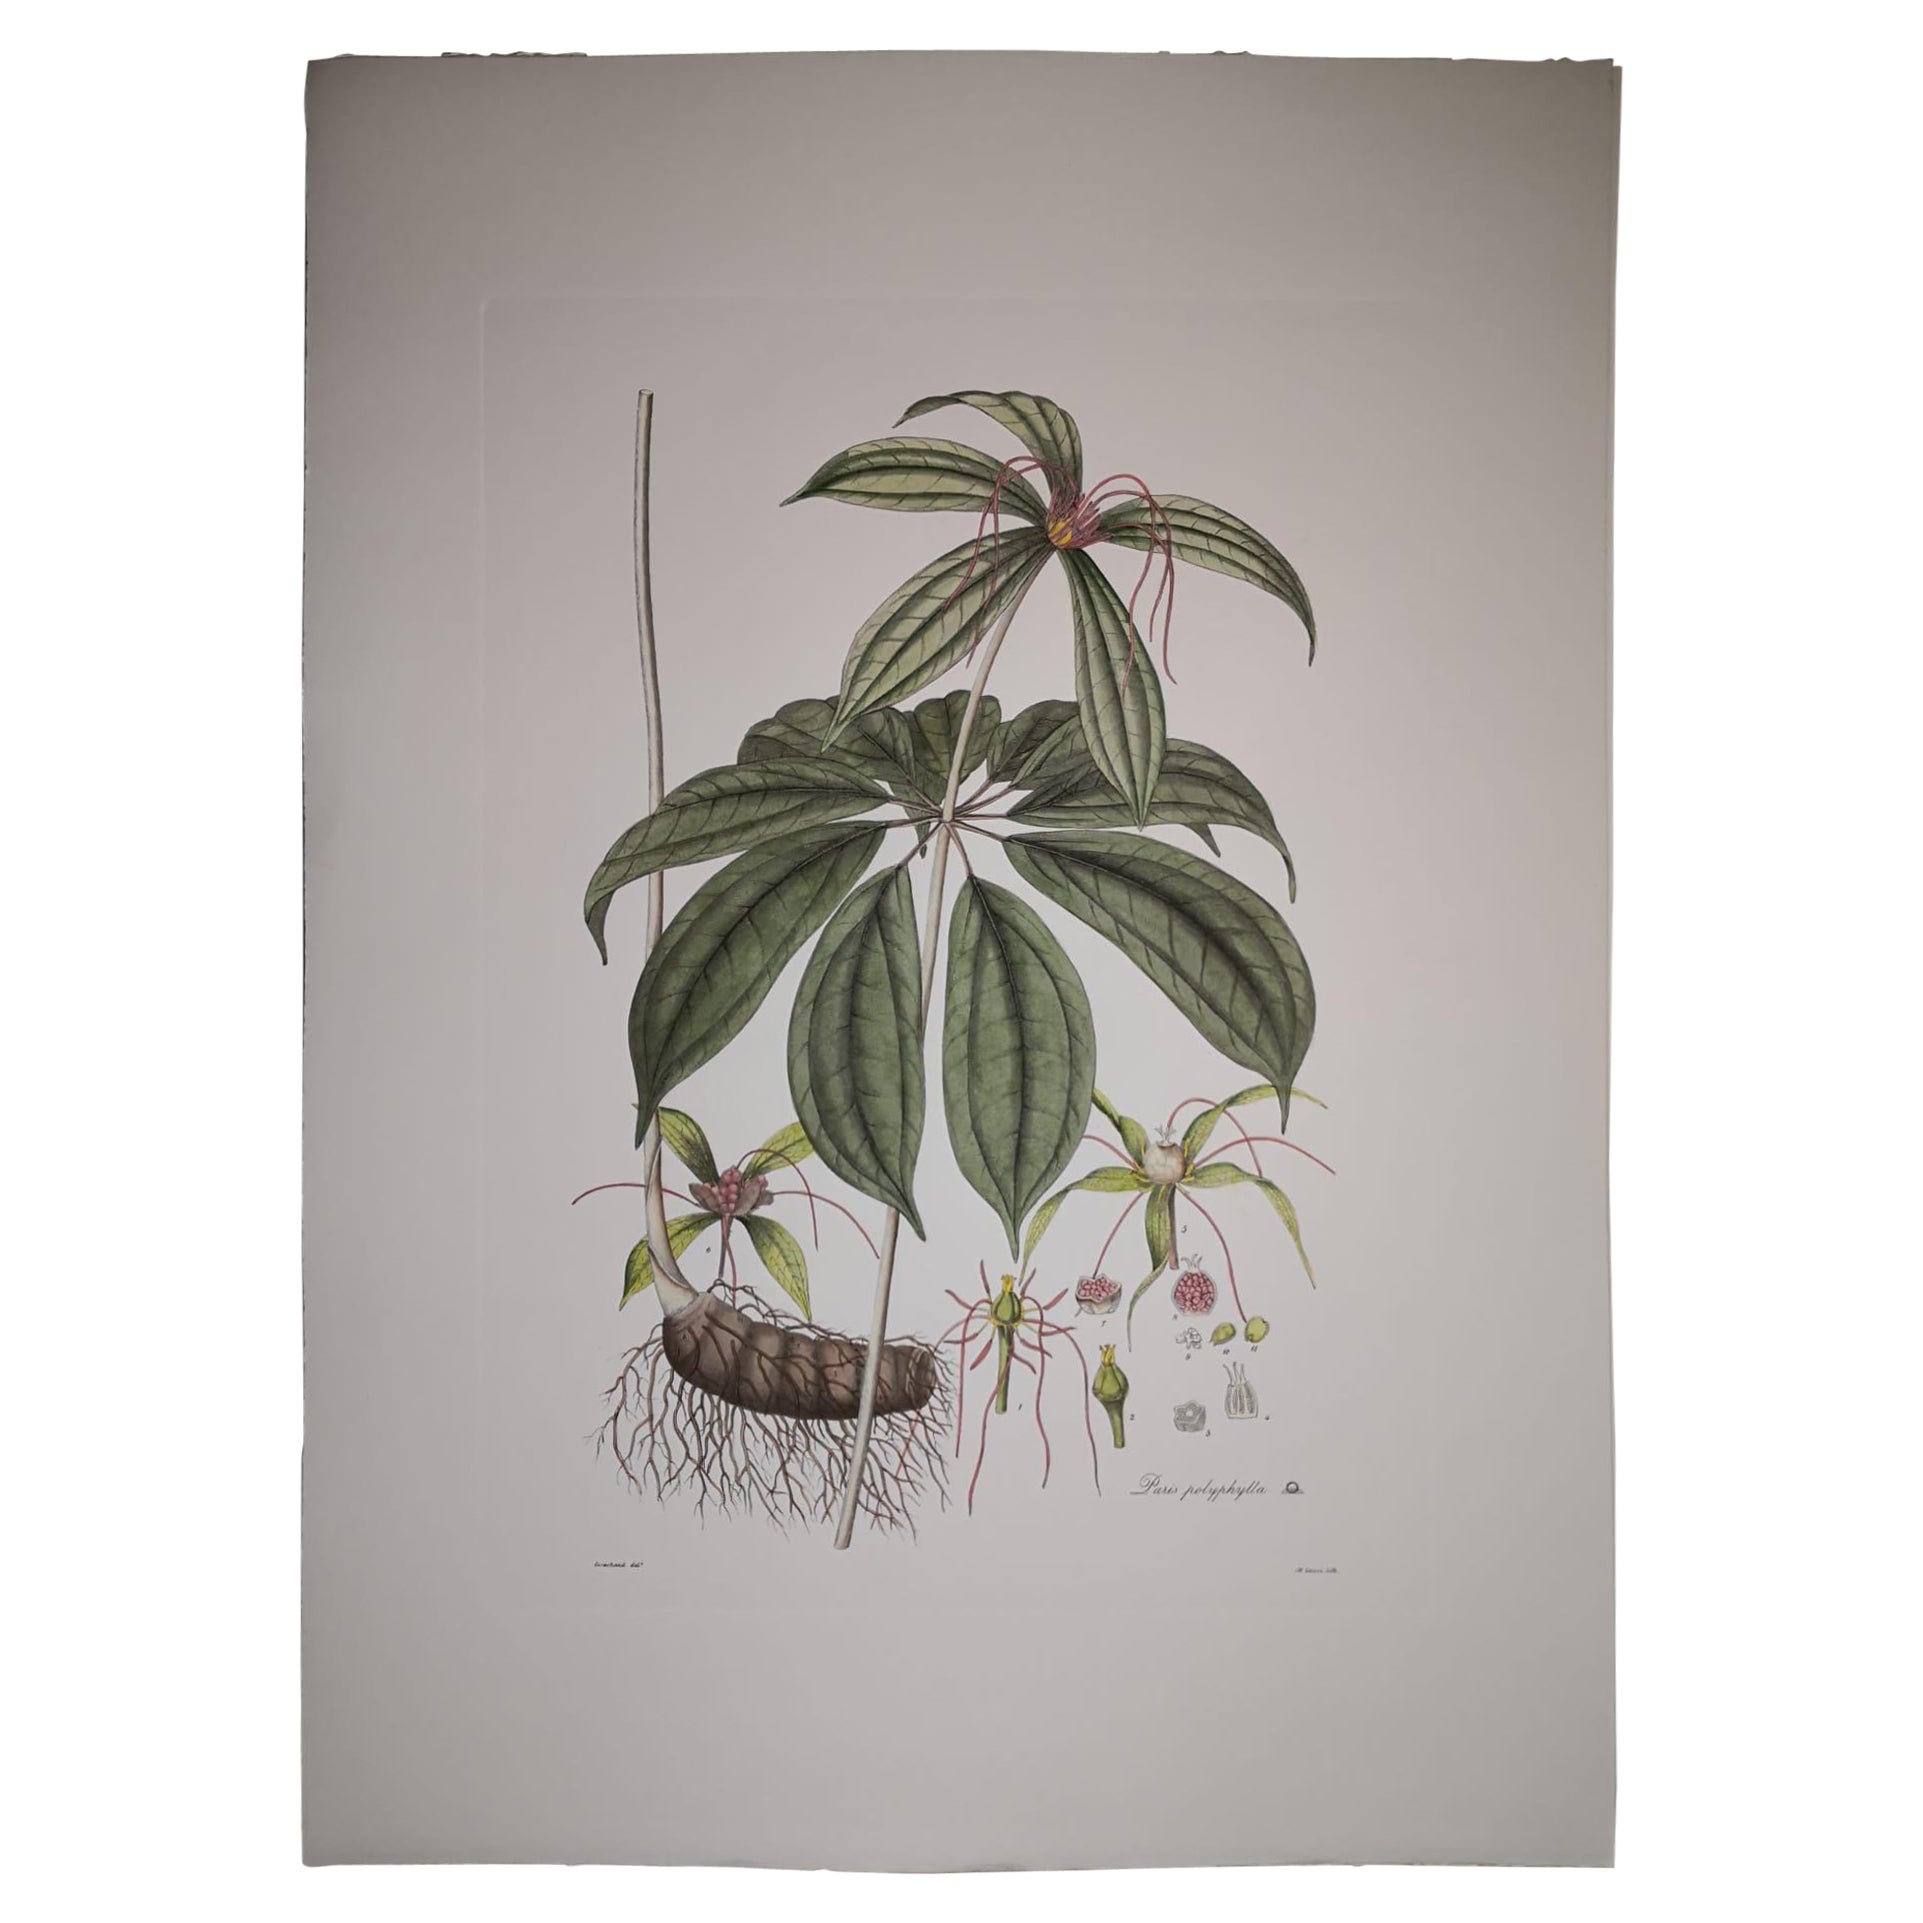 Italian Contemporary Hand Painted Botanical Print Representing Paris Polyphylla